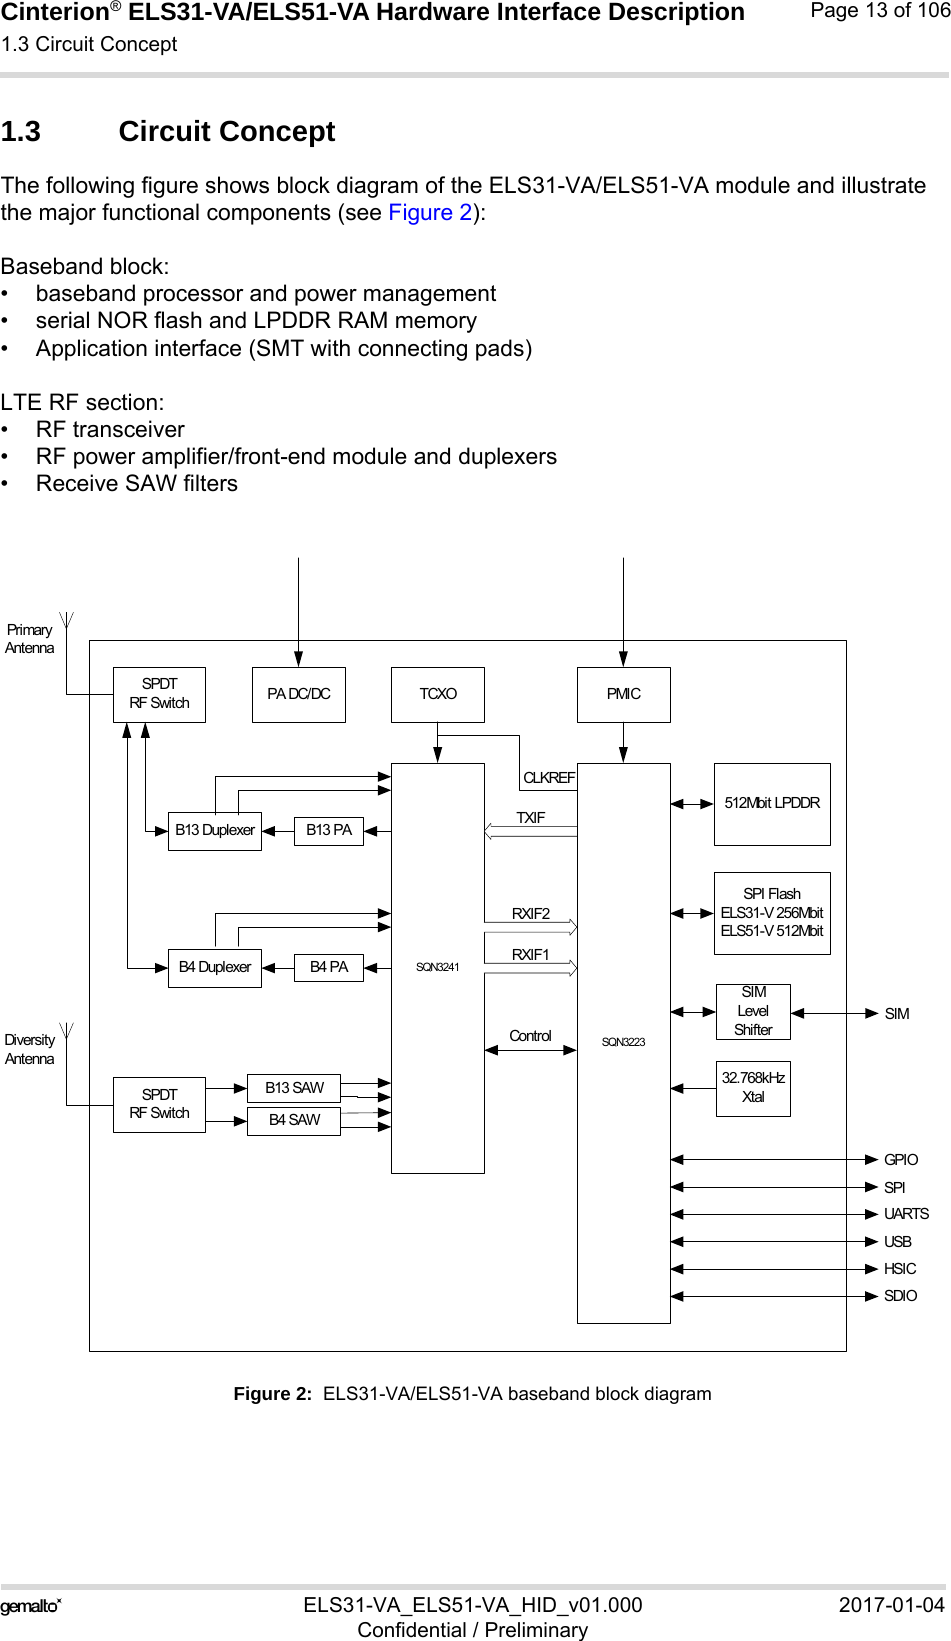 Cinterion® ELS31-VA/ELS51-VA Hardware Interface Description1.3 Circuit Concept13ELS31-VA_ELS51-VA_HID_v01.000 2017-01-04Confidential / PreliminaryPage 13 of 1061.3 Circuit ConceptThe following figure shows block diagram of the ELS31-VA/ELS51-VA module and illustrate the major functional components (see Figure 2): Baseband block:• baseband processor and power management• serial NOR flash and LPDDR RAM memory• Application interface (SMT with connecting pads)LTE RF section:• RF transceiver • RF power amplifier/front-end module and duplexers• Receive SAW filtersFigure 2:  ELS31-VA/ELS51-VA baseband block diagramSPDTRF SwitchB13 DuplexerB4 DuplexerSPDTRF SwitchPA DC/DC PMICB13 SAWB4 SAWSQN3241B13 PAB4 PAPrimaryAntennaDiversityAntennaTCXOControlRXIF1RXIF2TXIFCLKREF512Mbit LPDDRSPI FlashELS31-V 256MbitELS51-V 512MbitSIMLevel Shifter32.768kHz XtalSQN3223GPIOSPIUARTSUSBHSICSDIOSIM